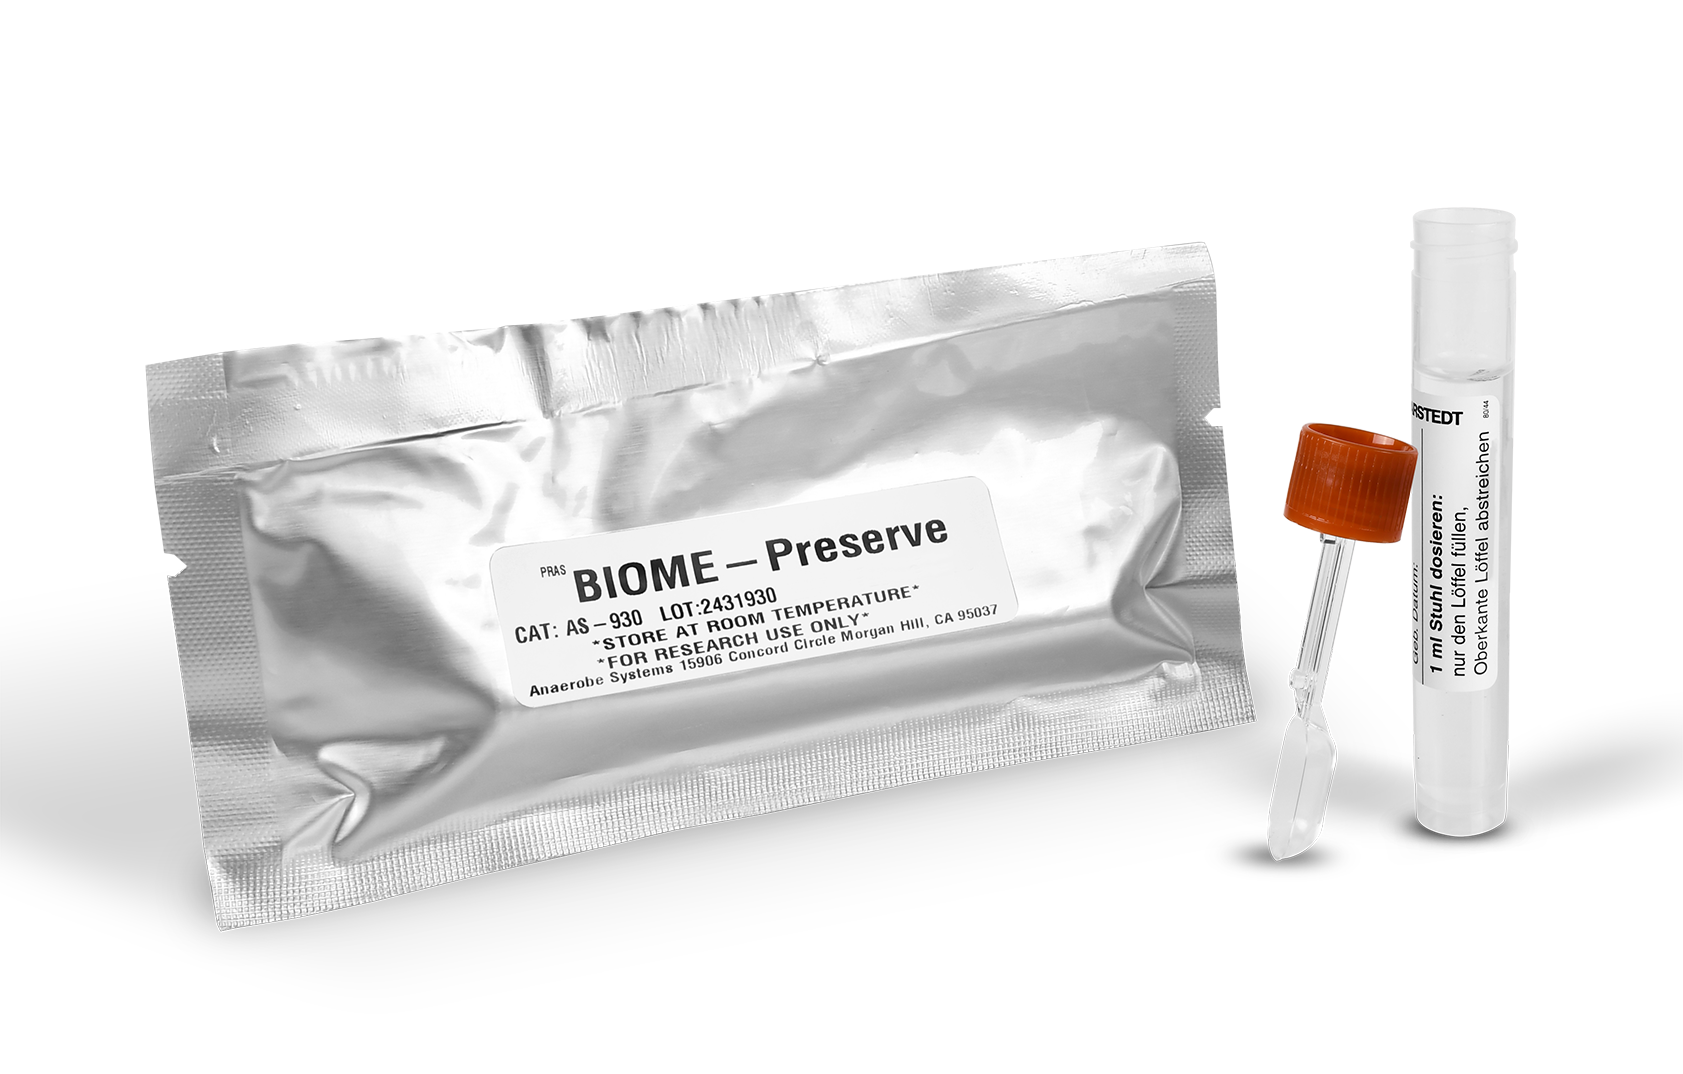 BIOME-Preserve Microbiome Collection Kit